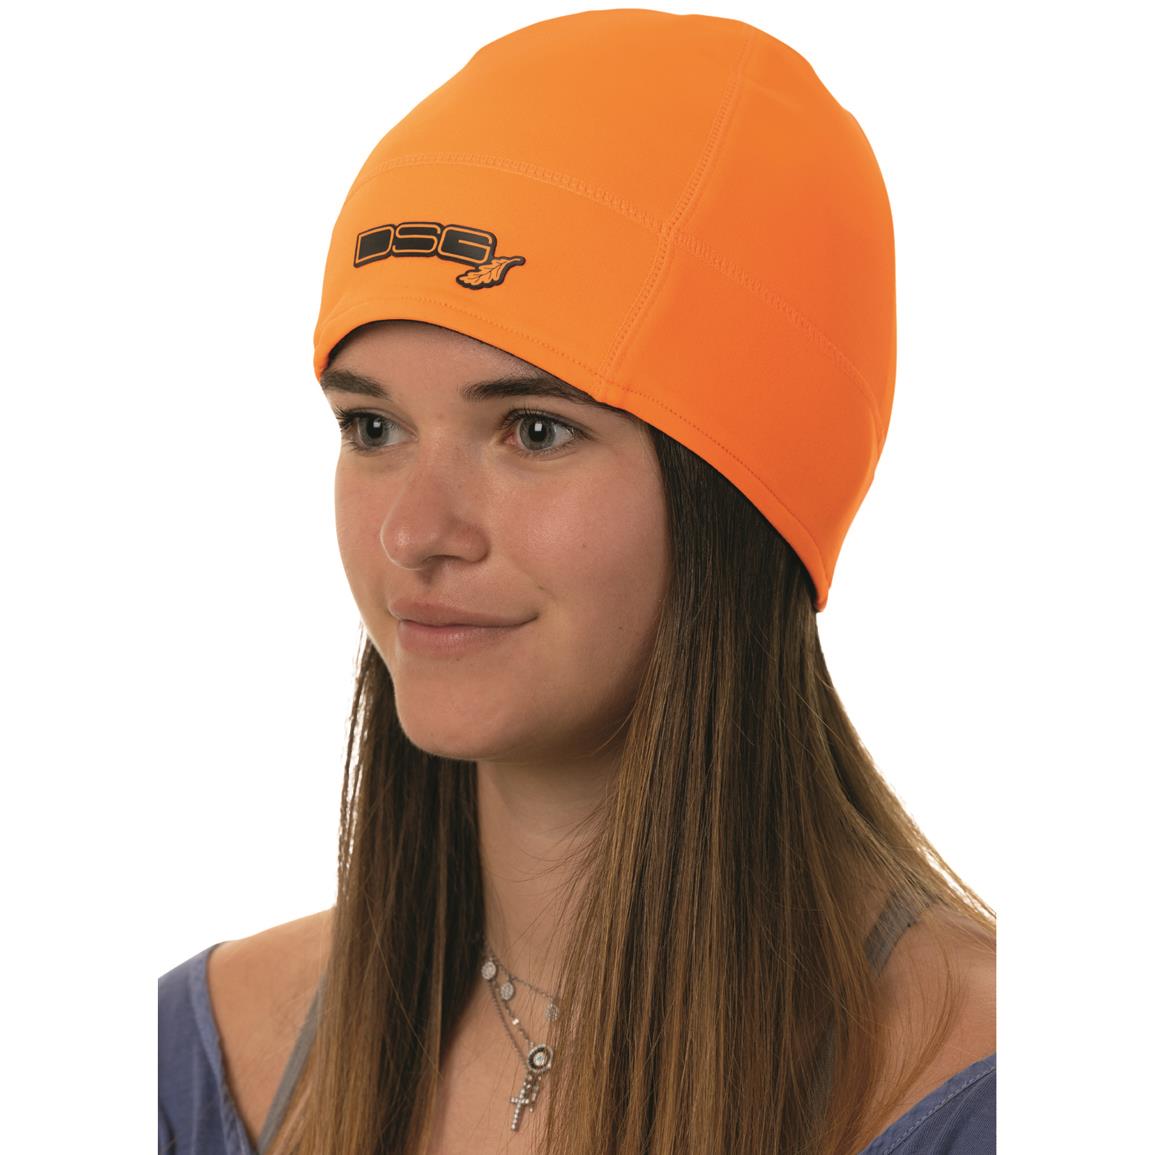 DSG Outerwear Women's D-Tech Cold-Weather Beanie, Blaze Orange